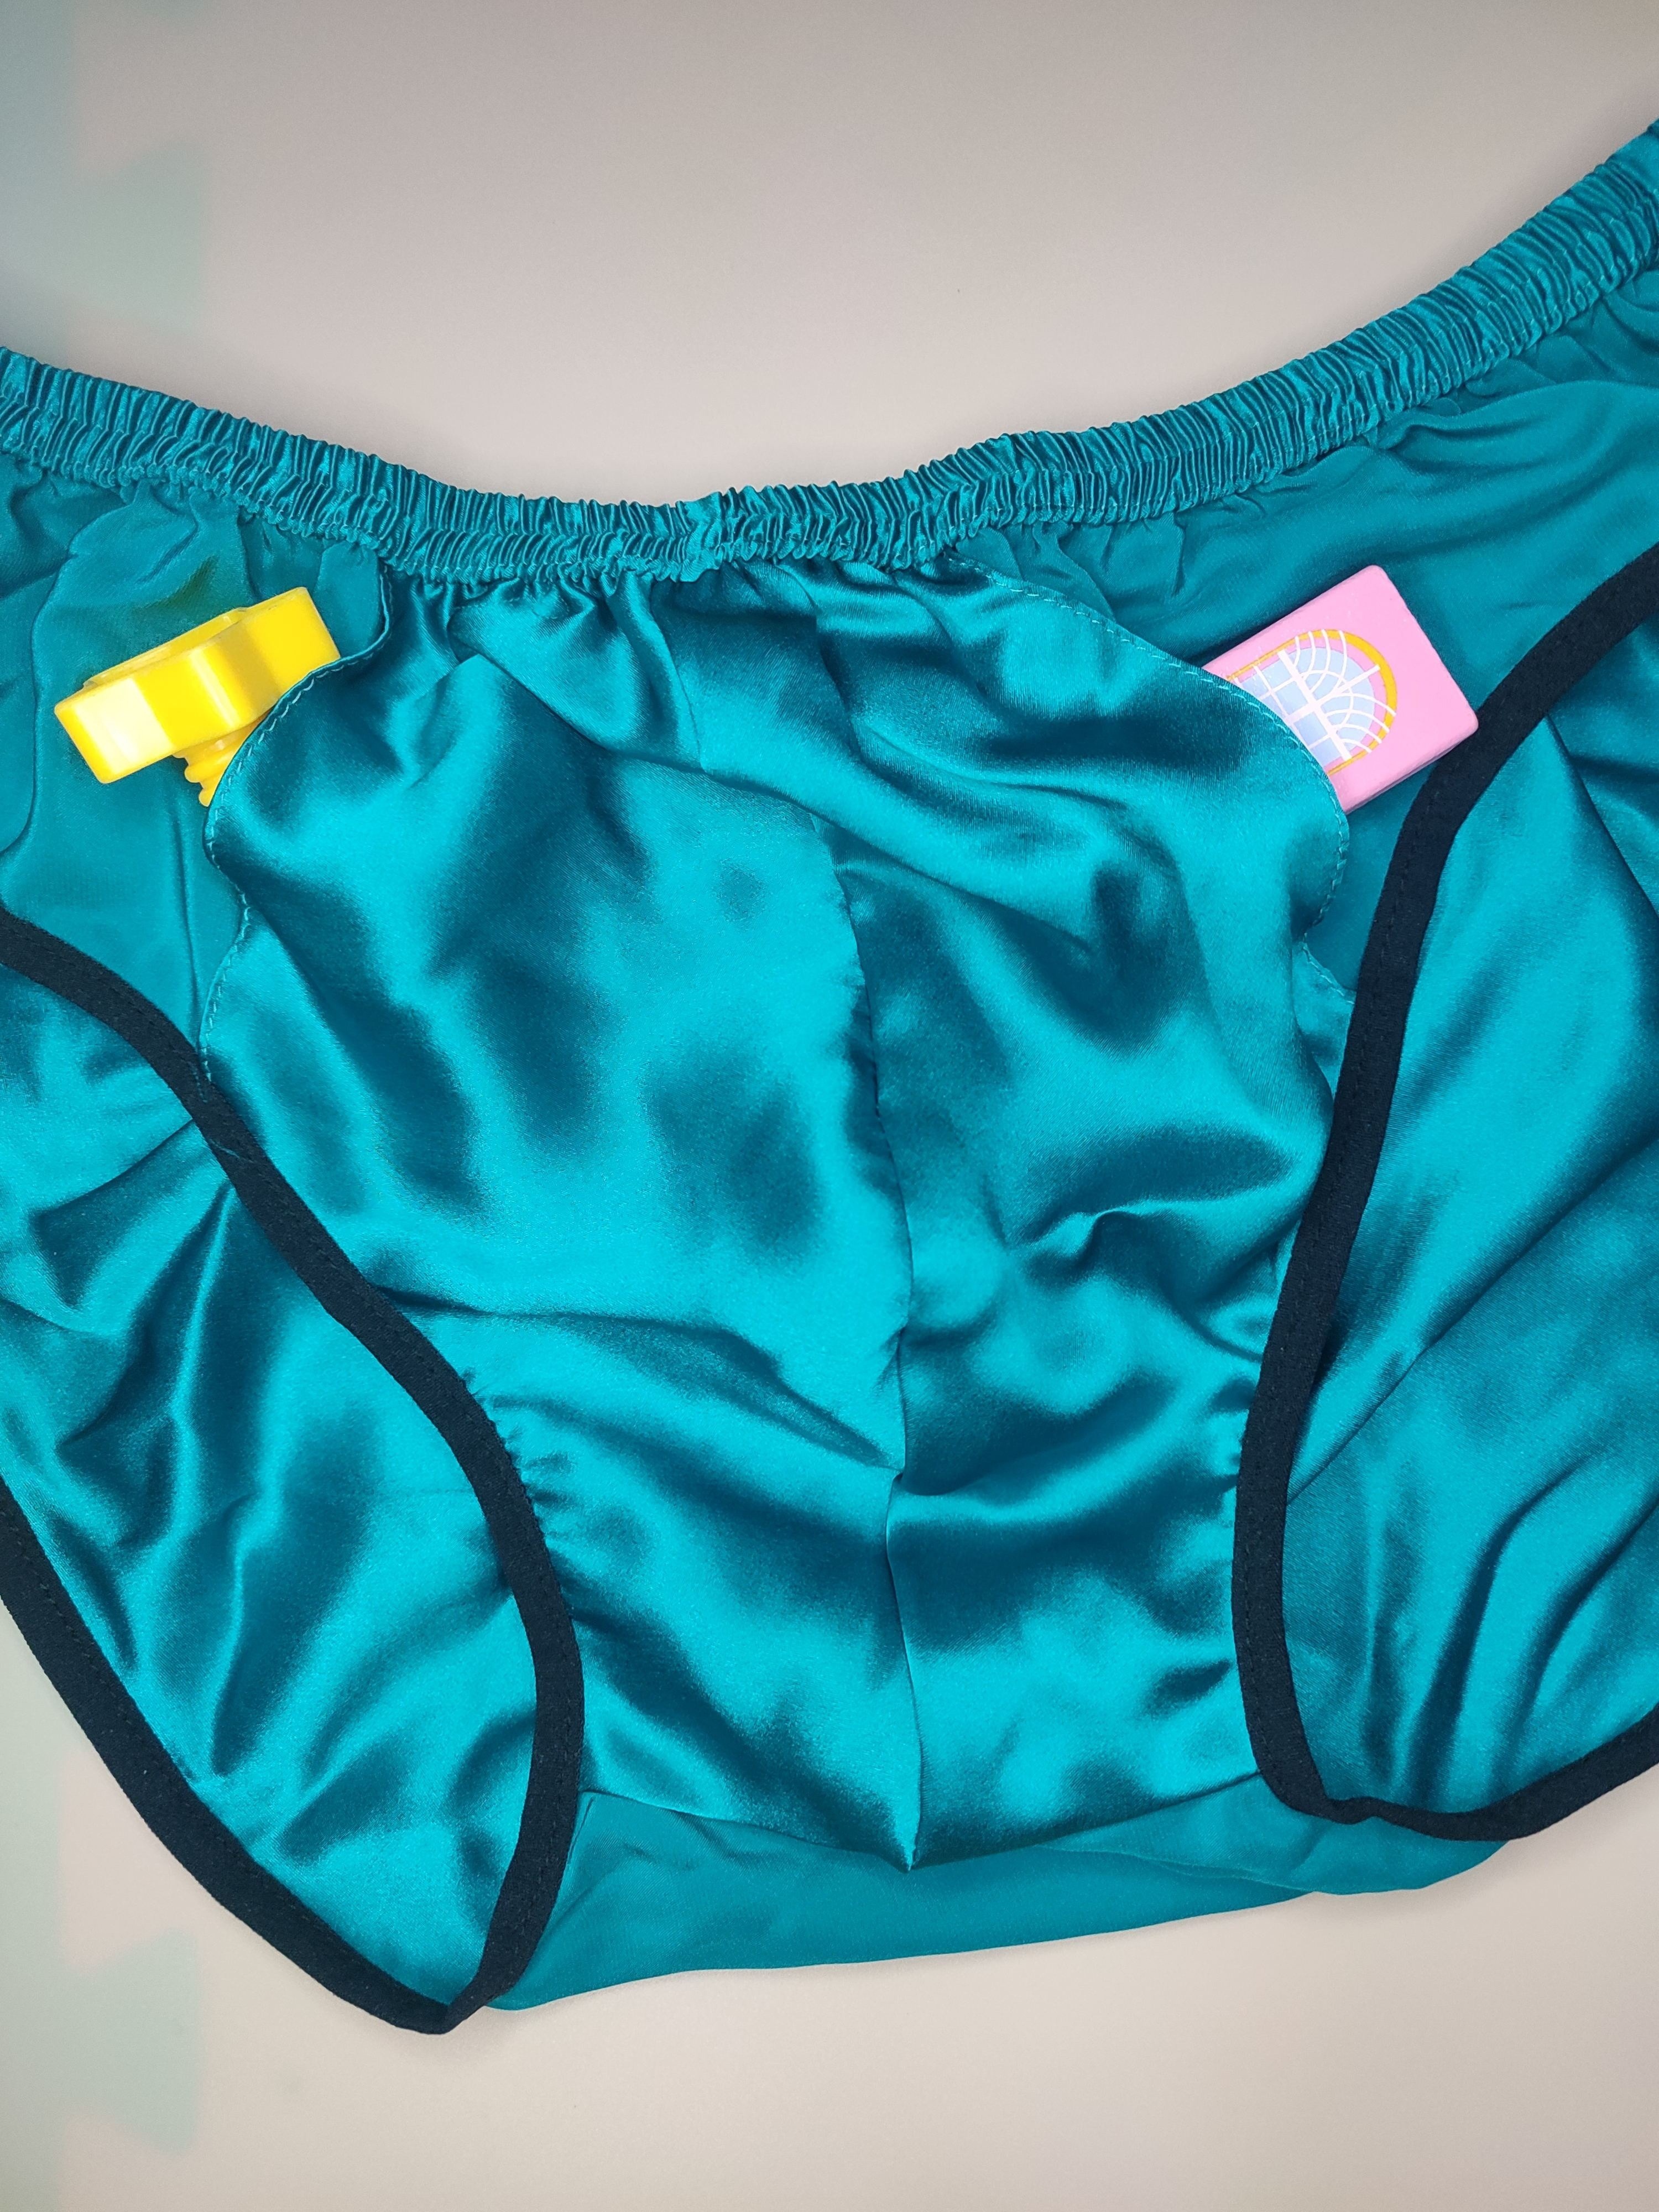 Underwear Malta - The true nature of man is… GREEN! Find the